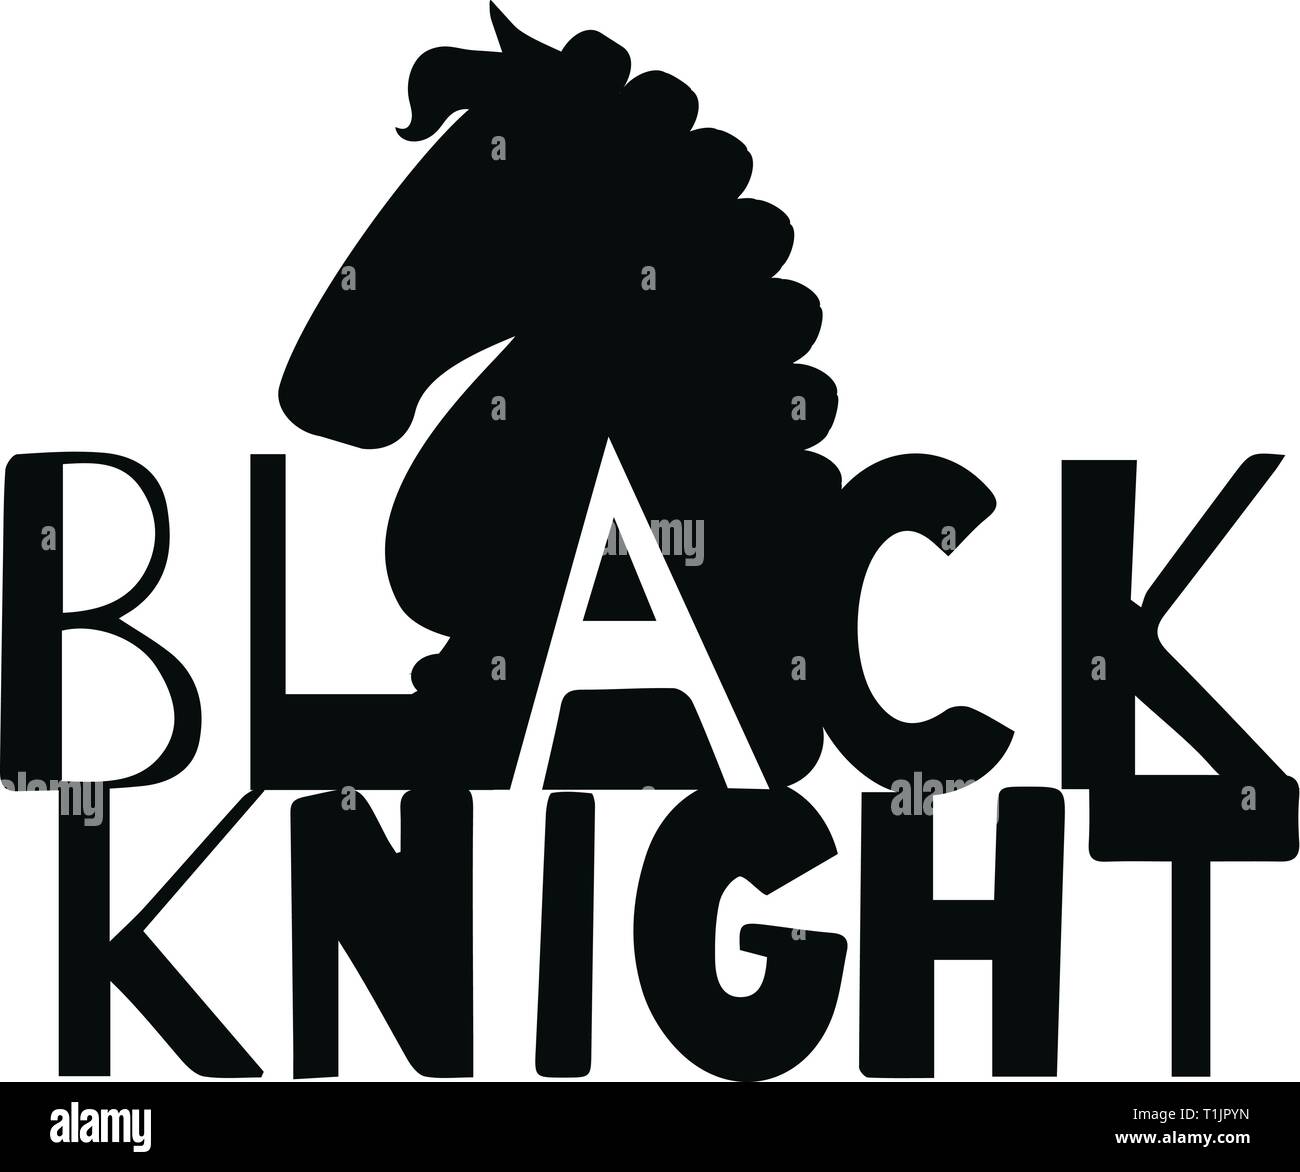 Black knight chess symbol & lettering Stock Vector